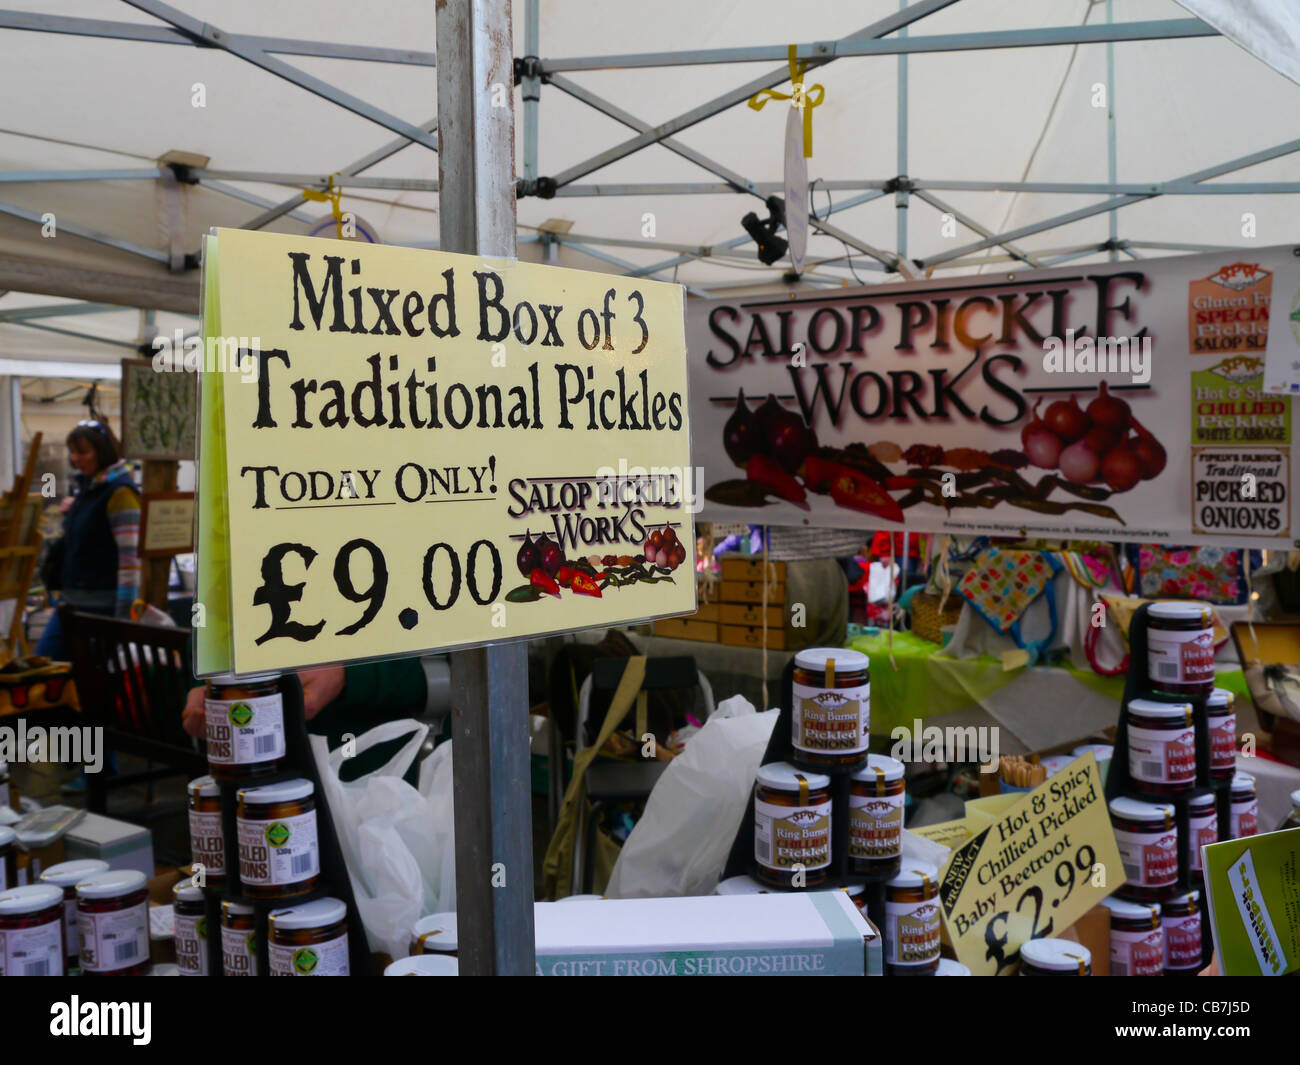 Pickle stall at Made in Shropshire market Shrewsbury Shropshire England Stock Photo